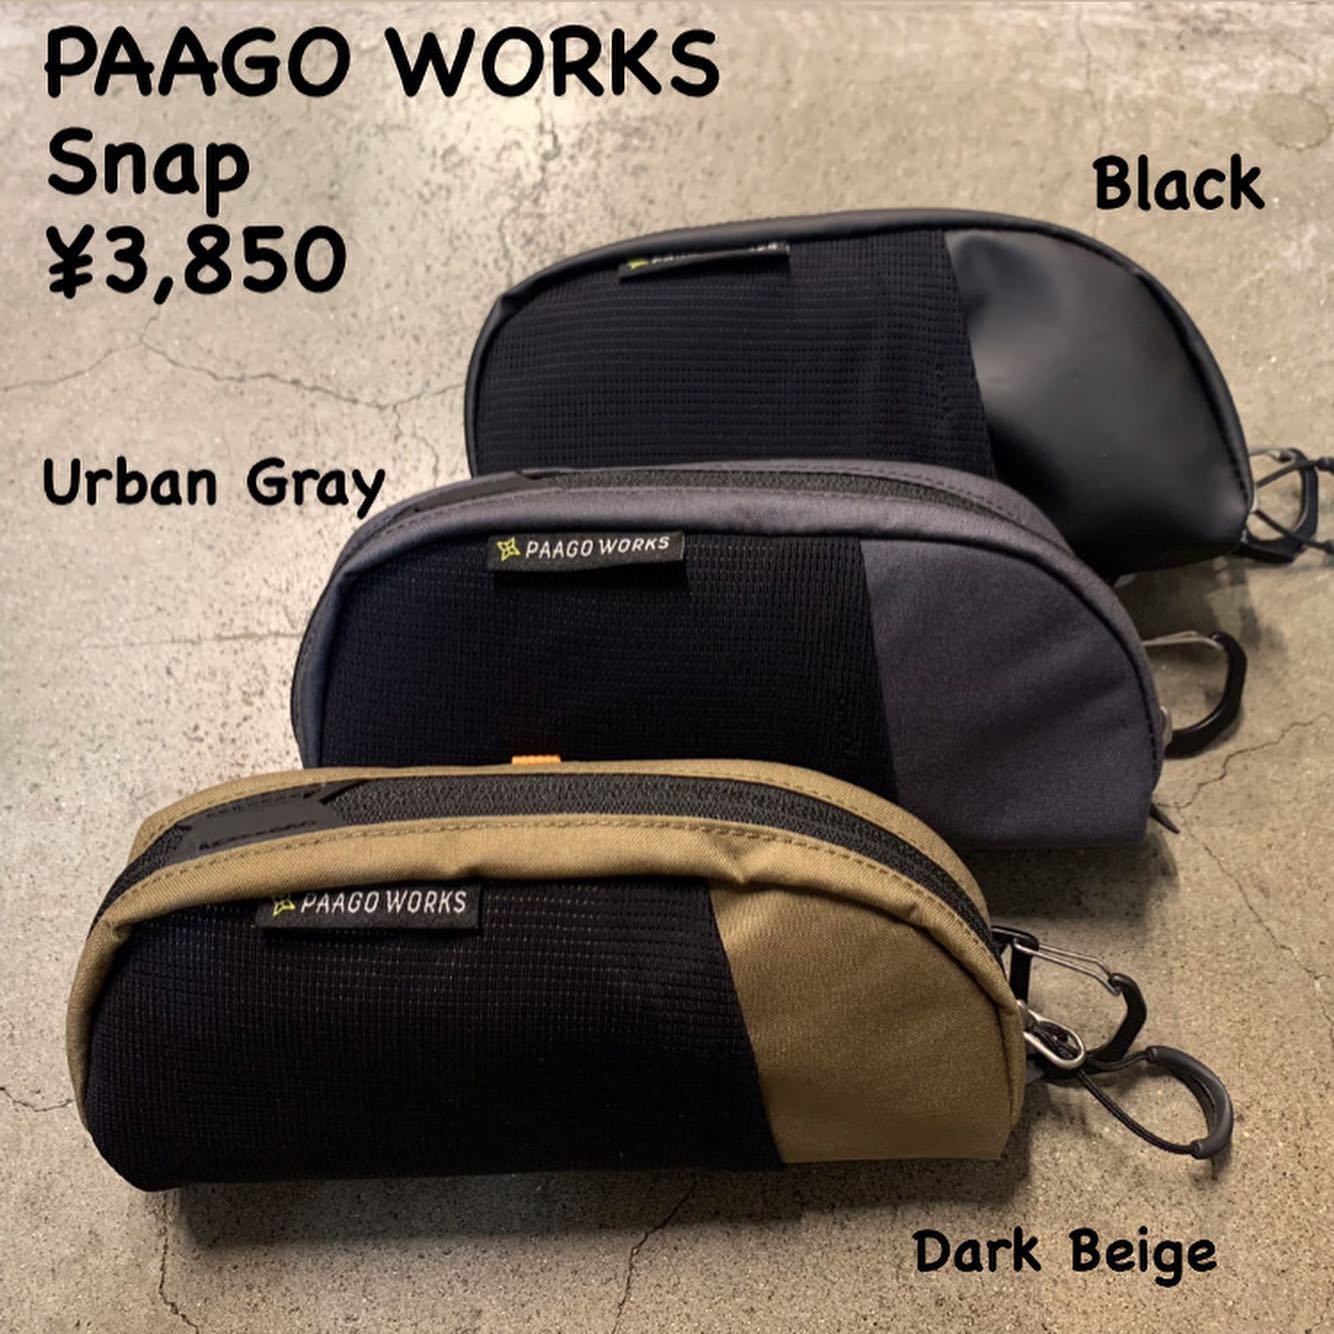 『PAAGO WORKS スナップ』再入荷のお知らせ